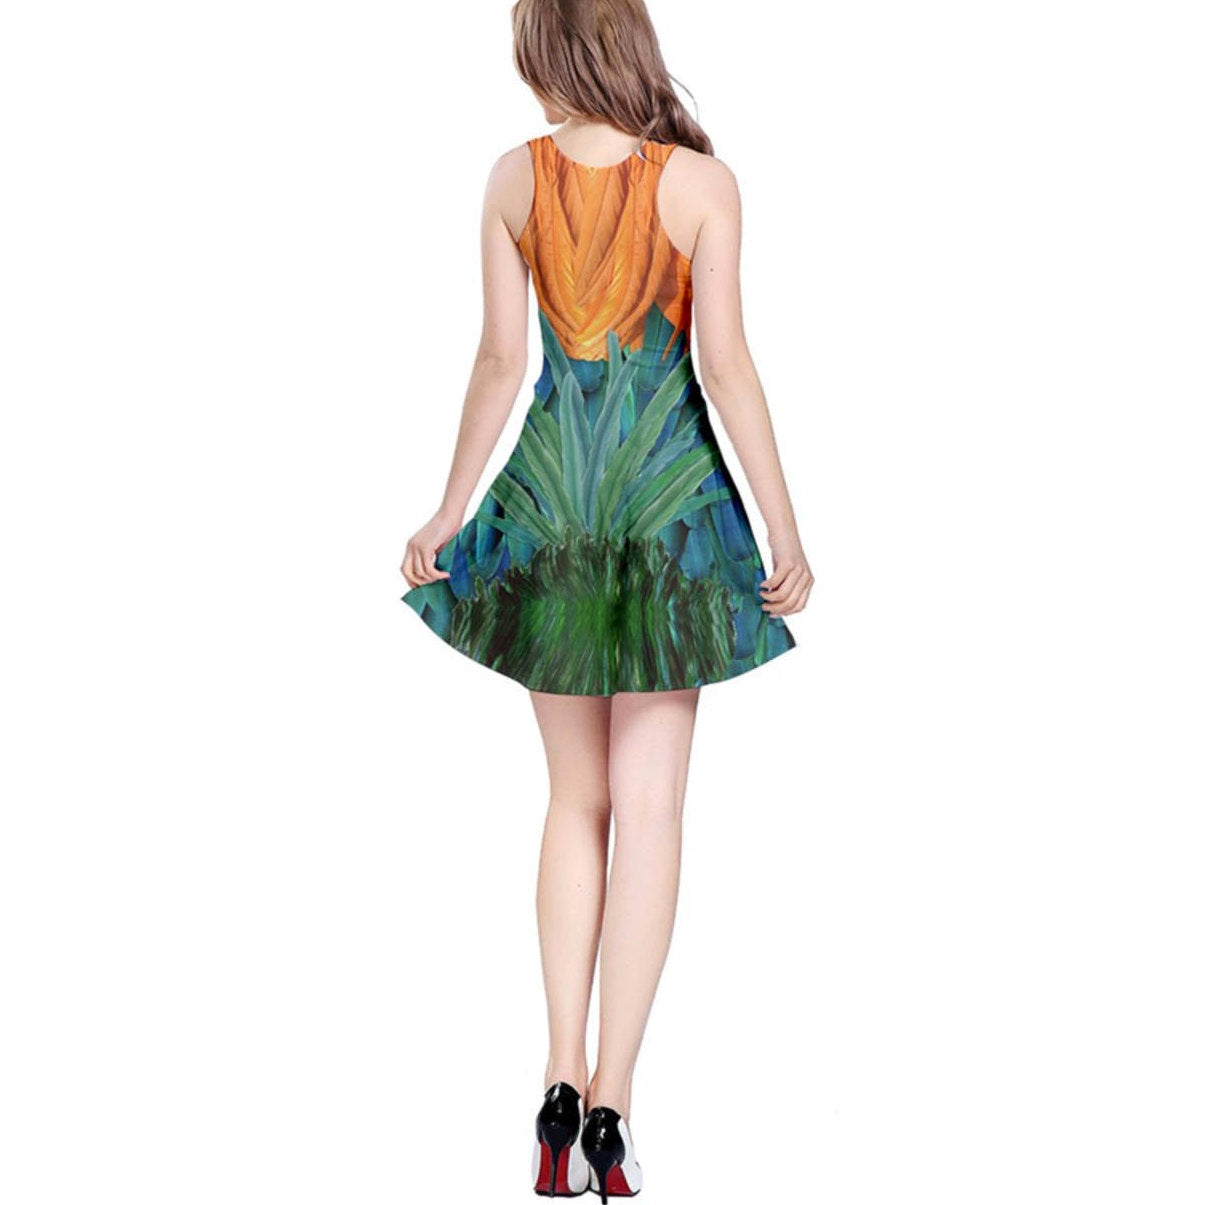 Heihei Moana Inspired Sleeveless Dress